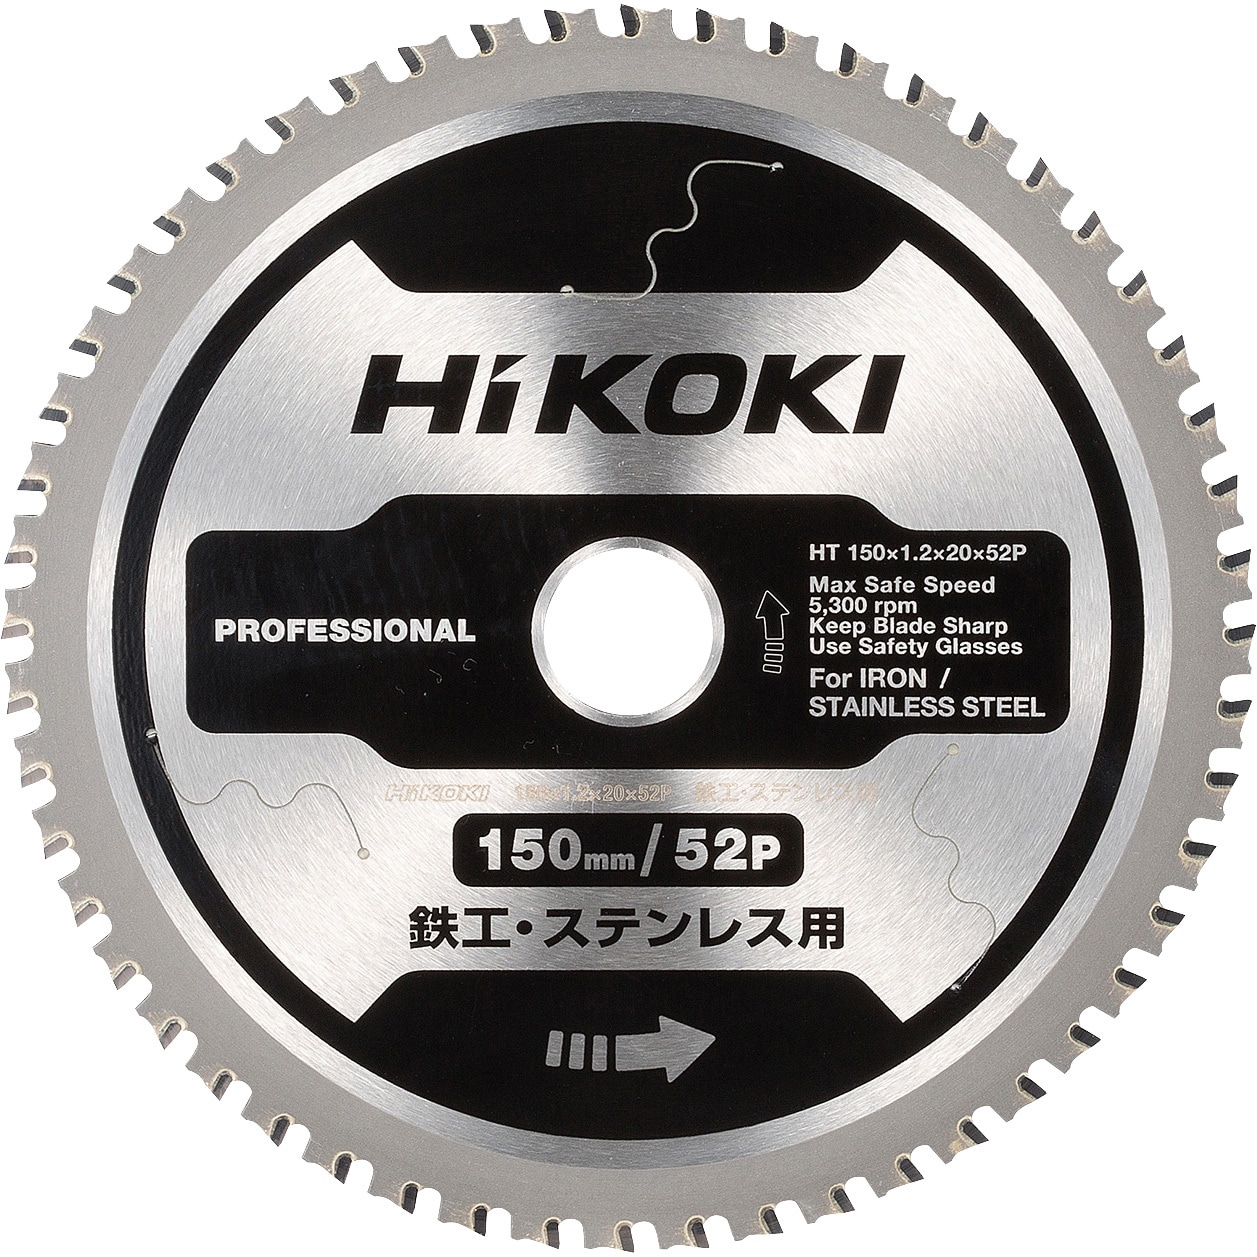 HiKOKI(ハイコーキ) 36V 150mm チップソー切断機 軟鋼材 - 工具